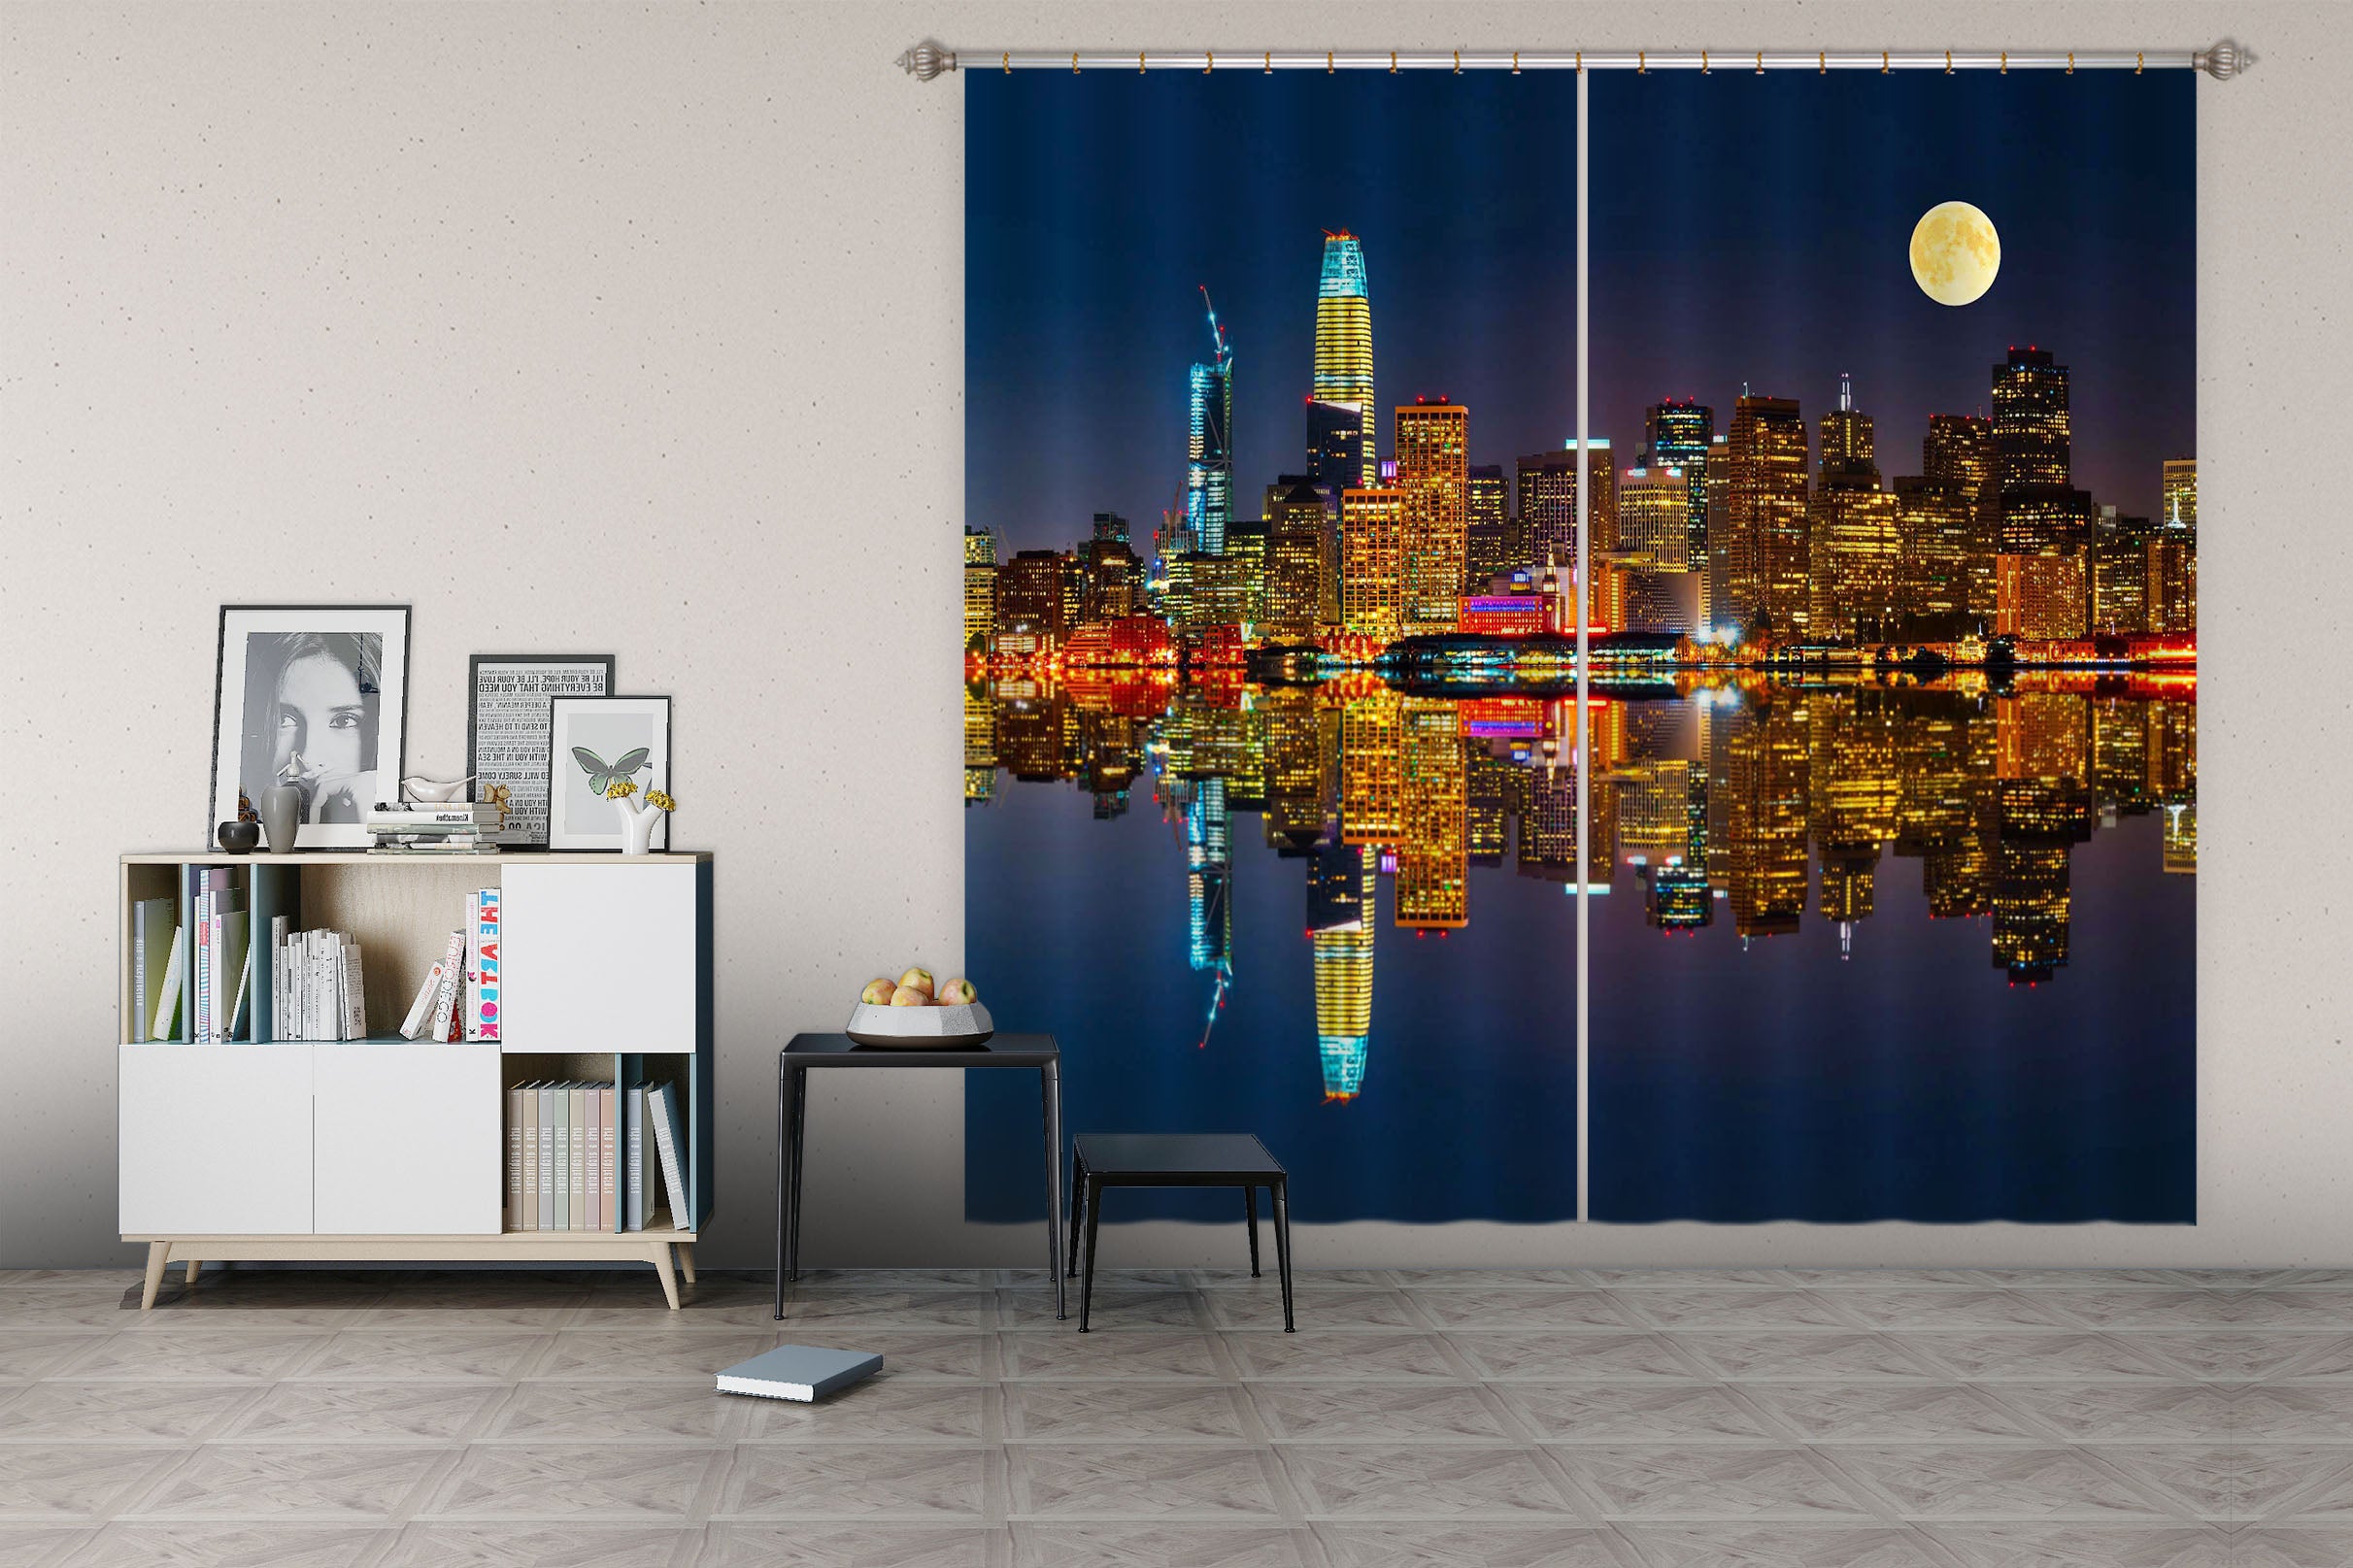 3D Wanjia Lighting 187 Marco Carmassi Curtain Curtains Drapes